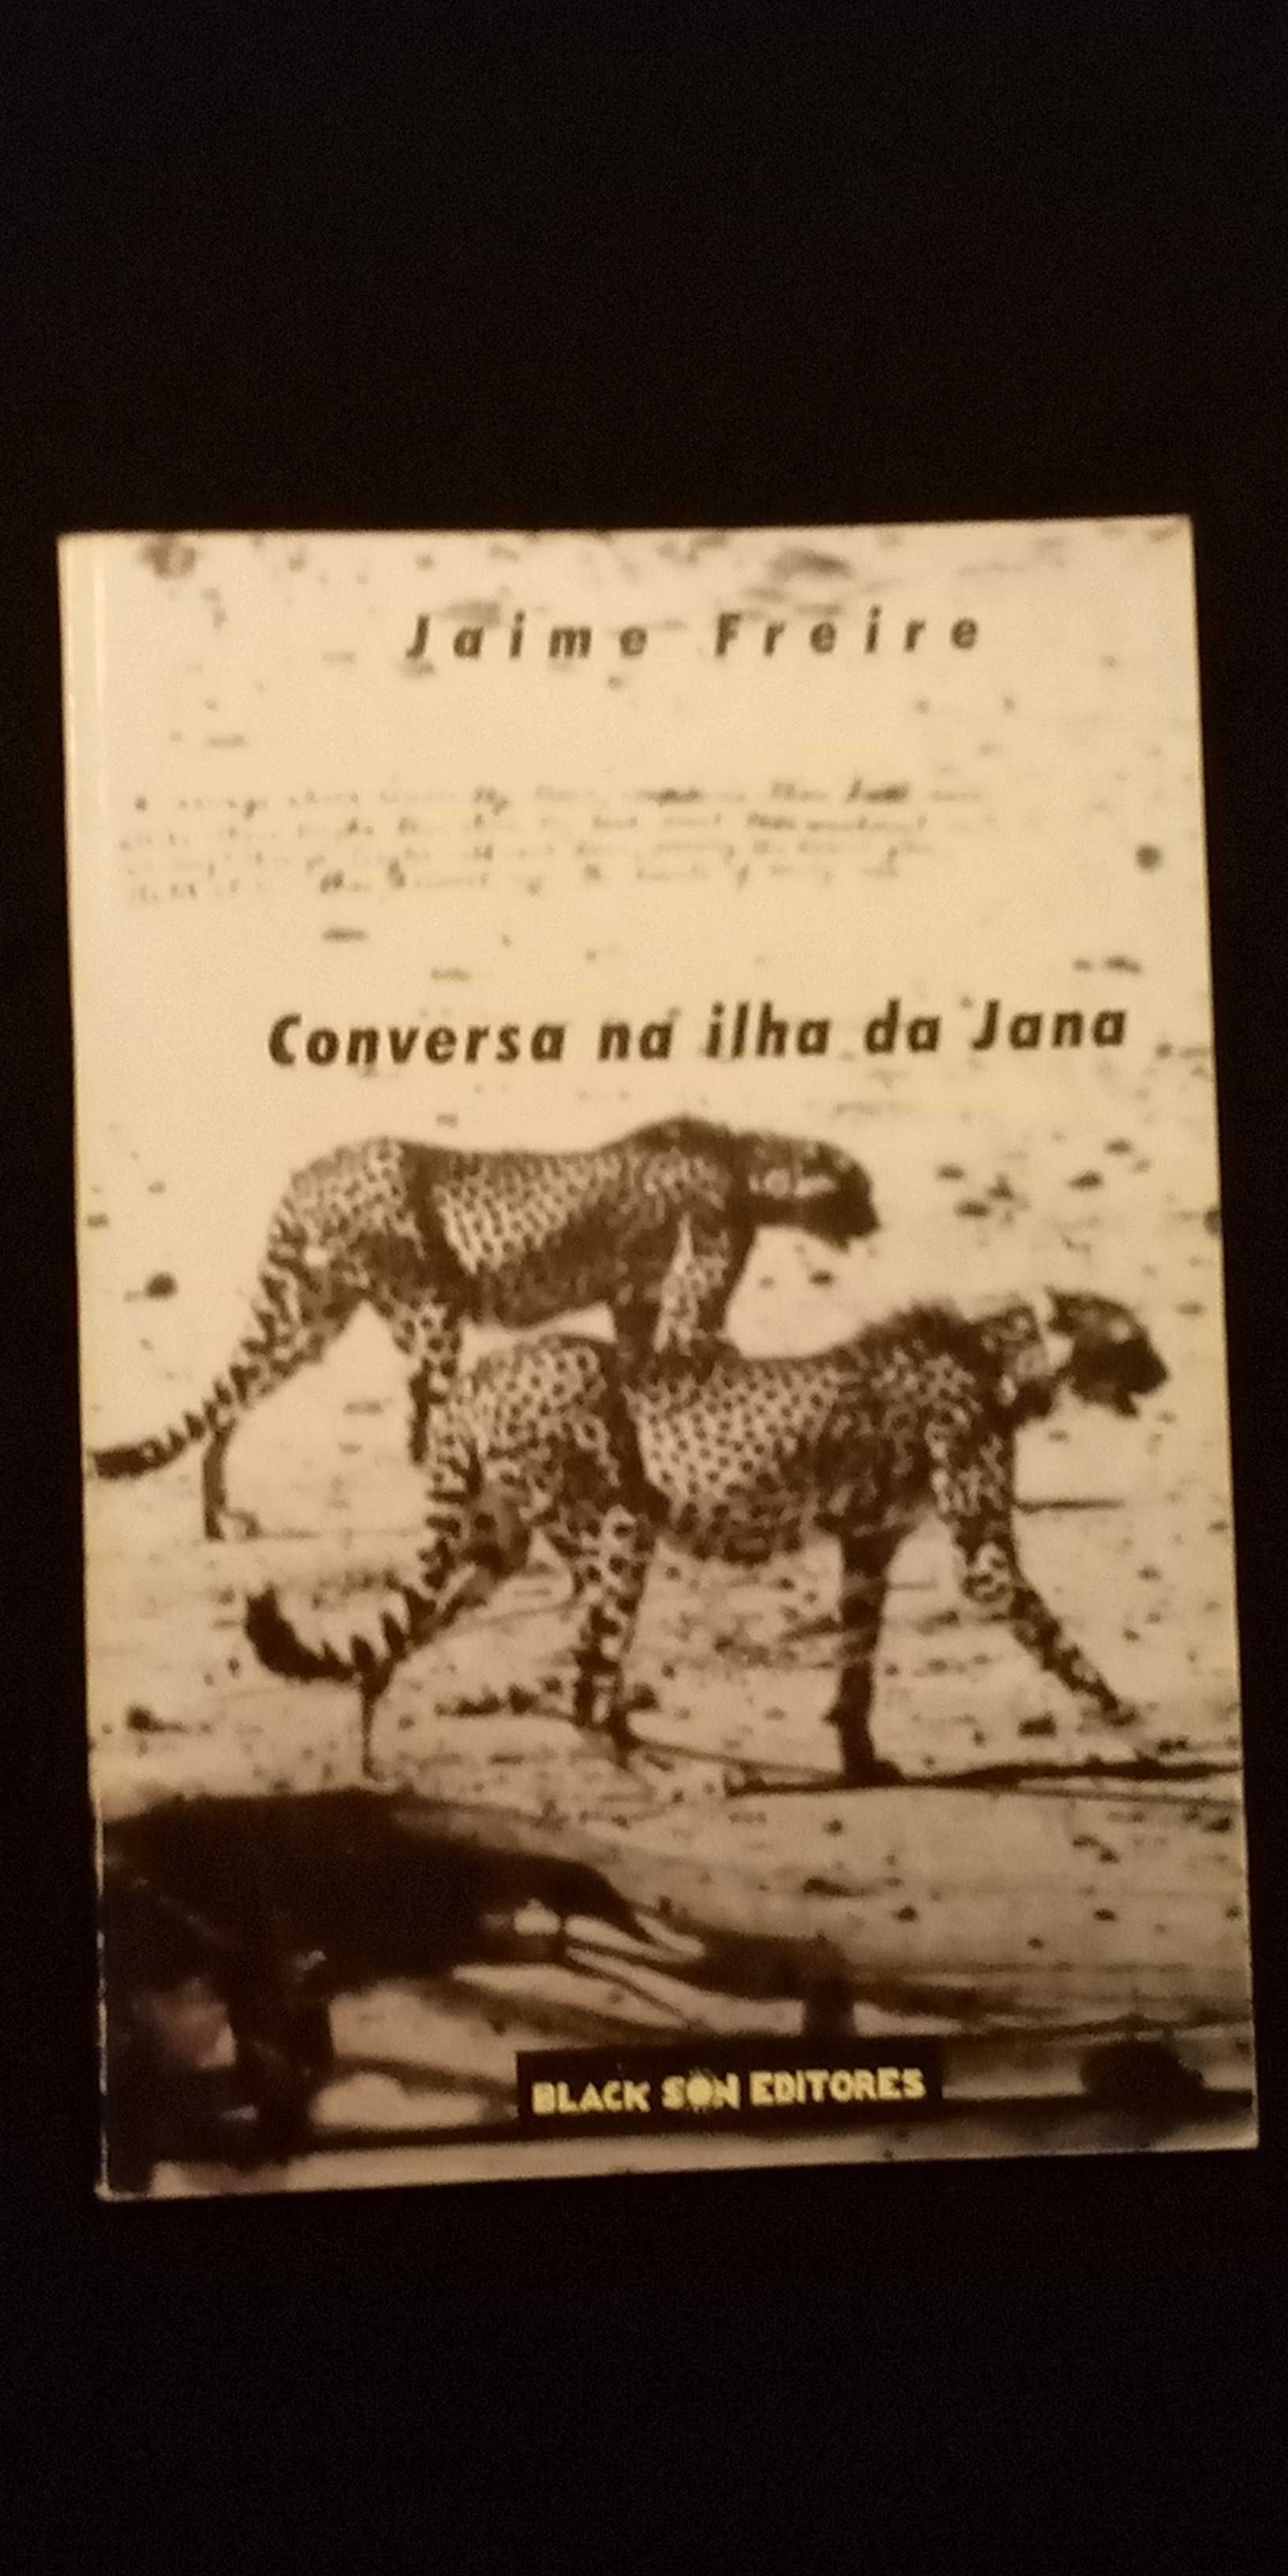 Jaime Freire - Conversa na ilha da Jana